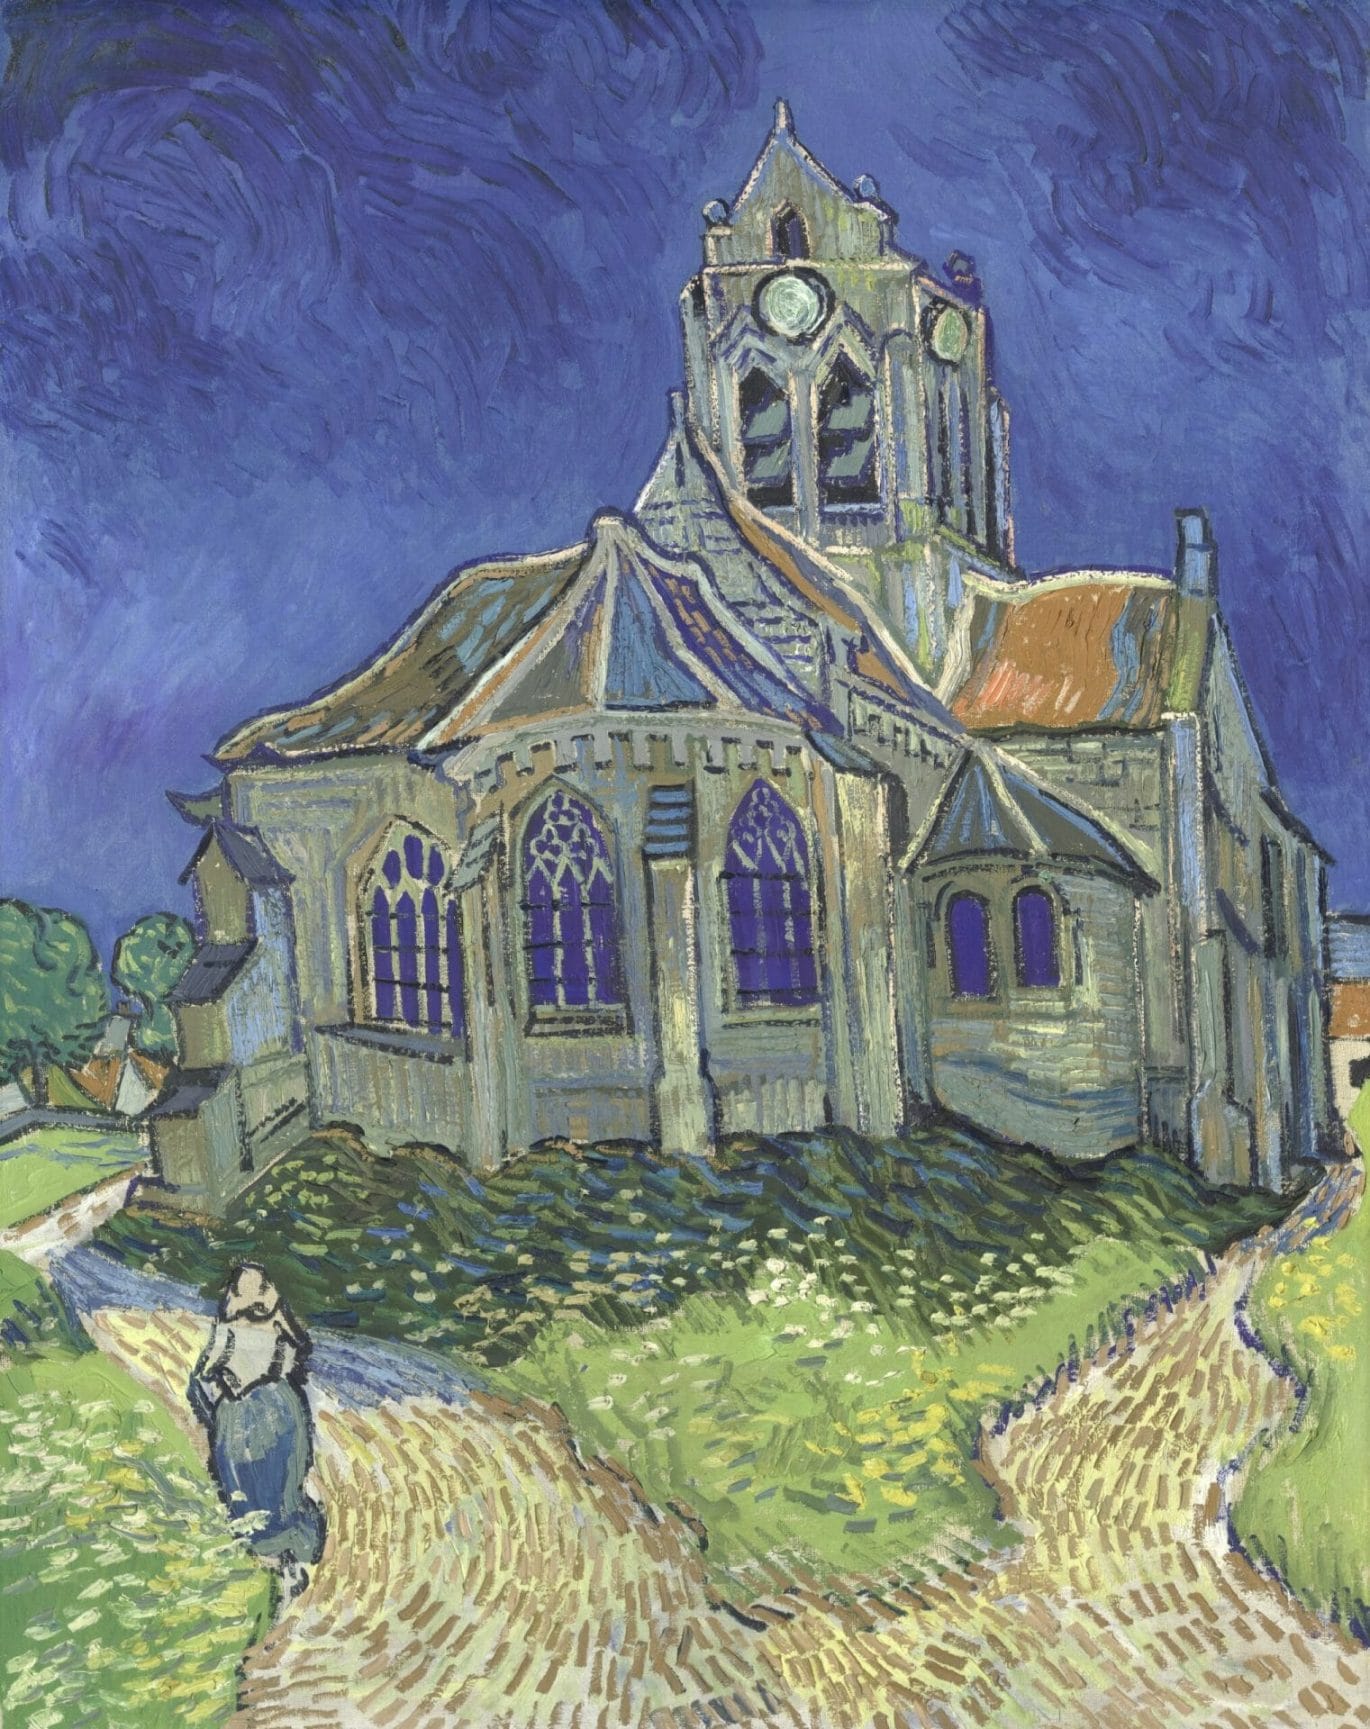 Vincent van Gogh, De kerk van Auvers-sur-Oise, 1890, olieverf op doek, 93 x 74,5 cm, Musée d’Orsay, Parijs